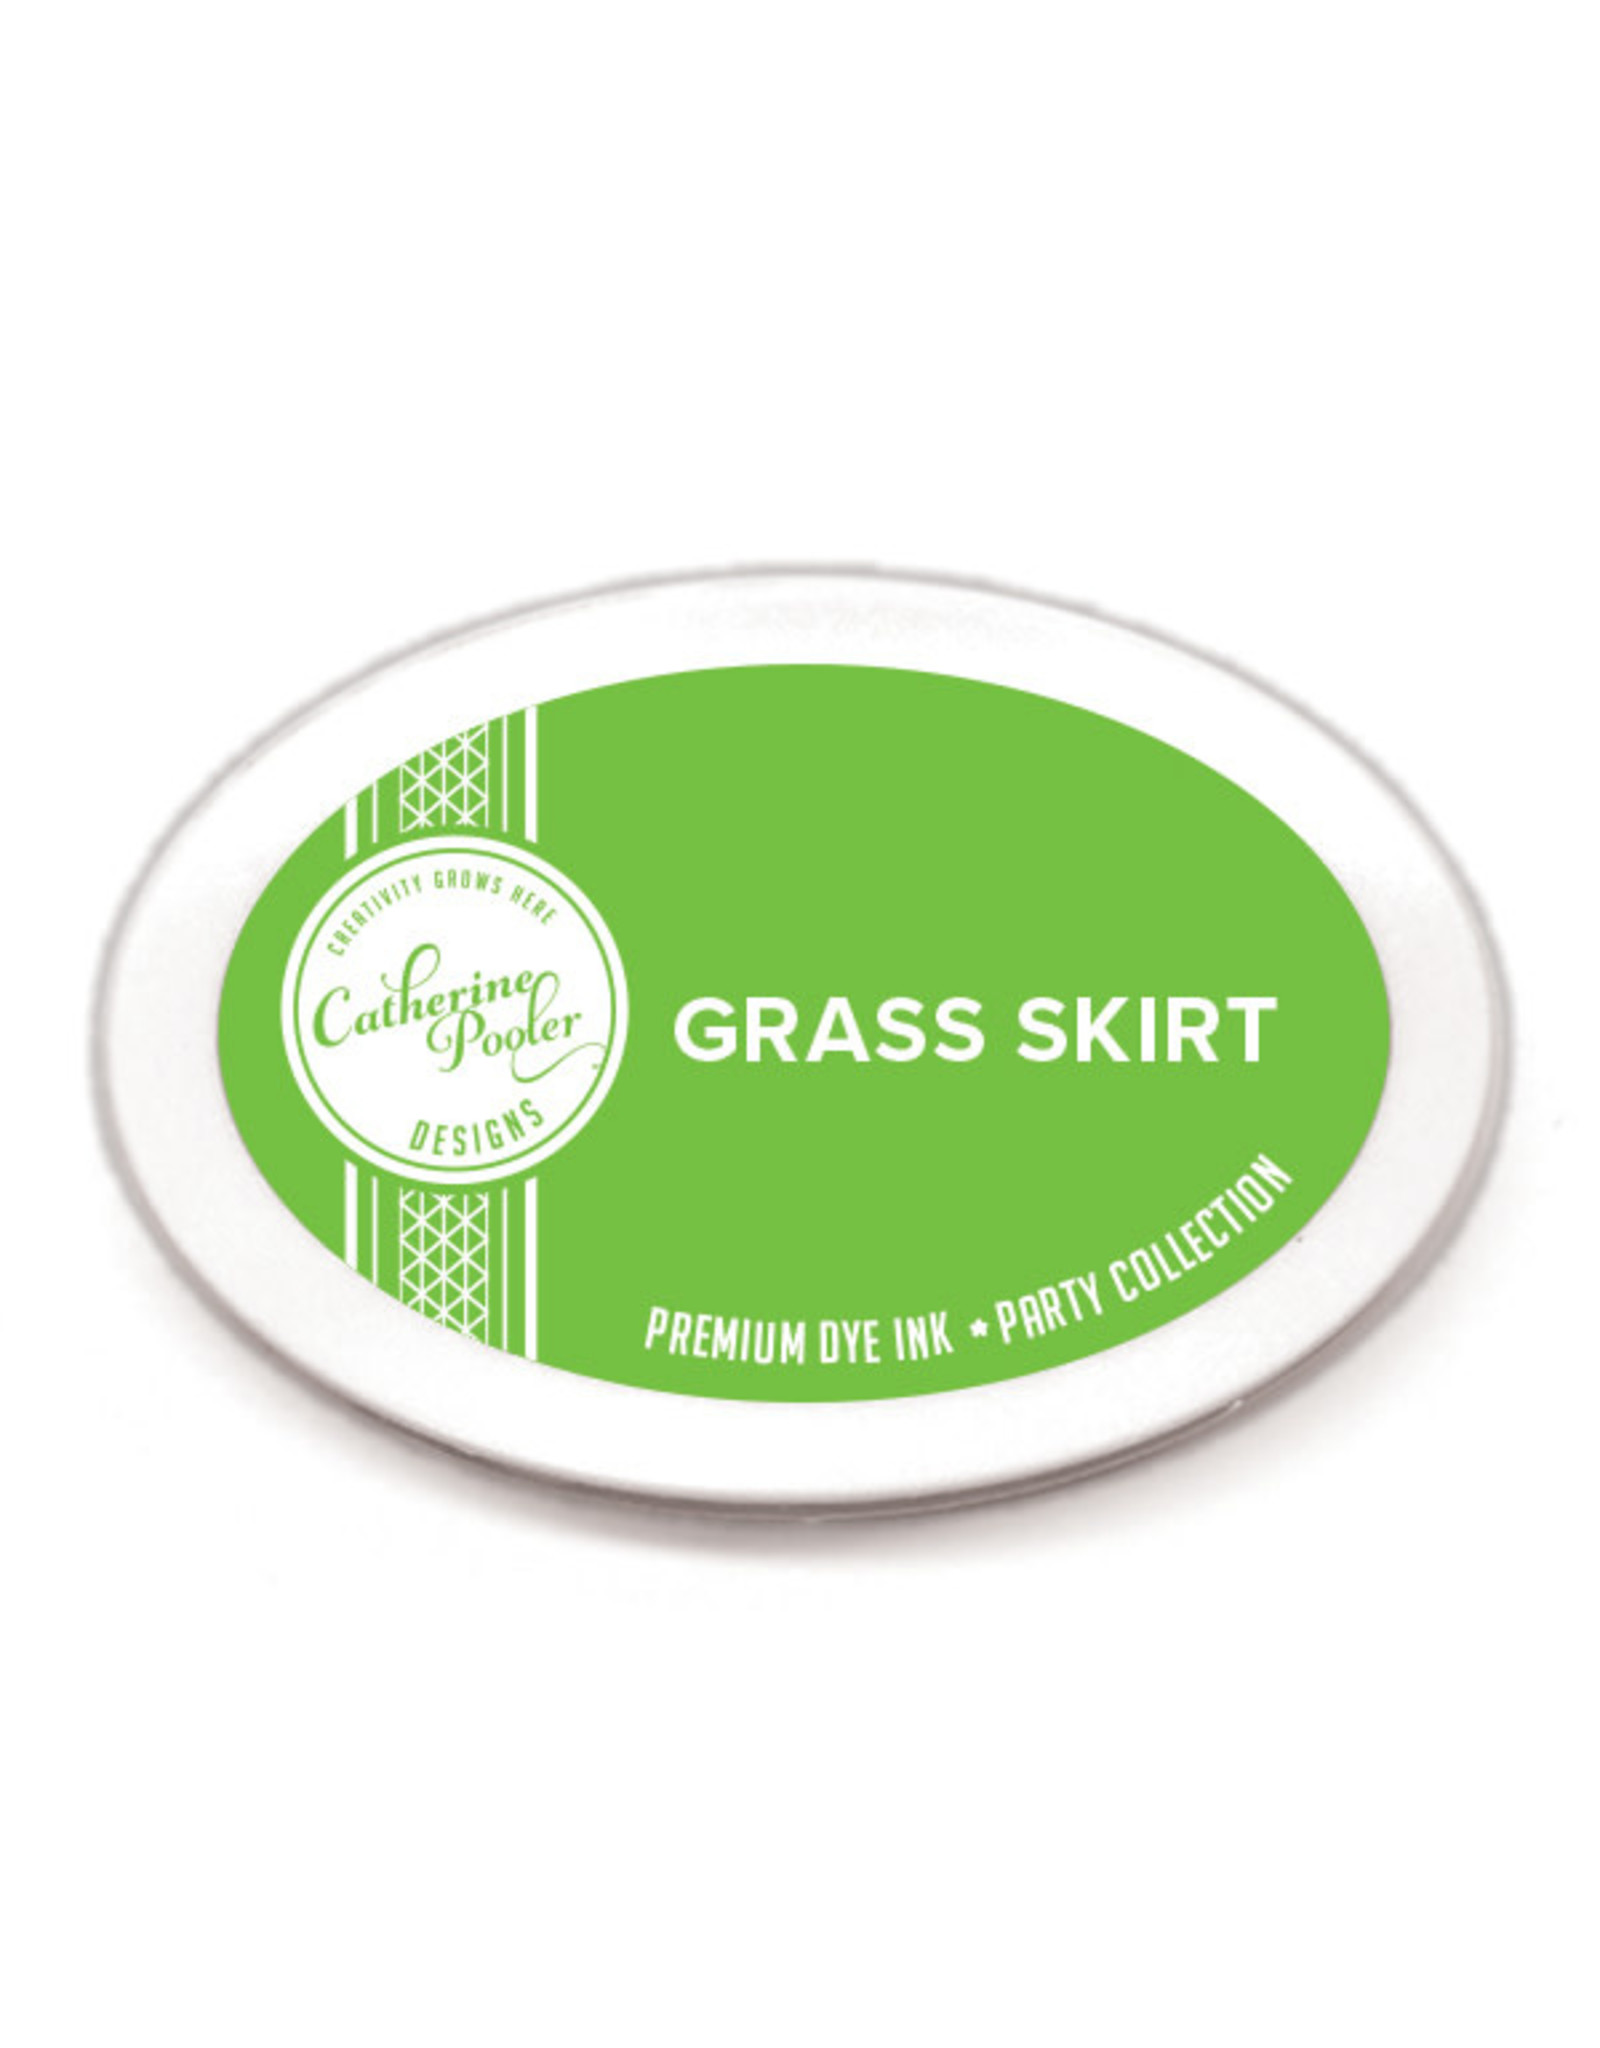 Catherine Pooler Designs Grass Skirt Ink Pad